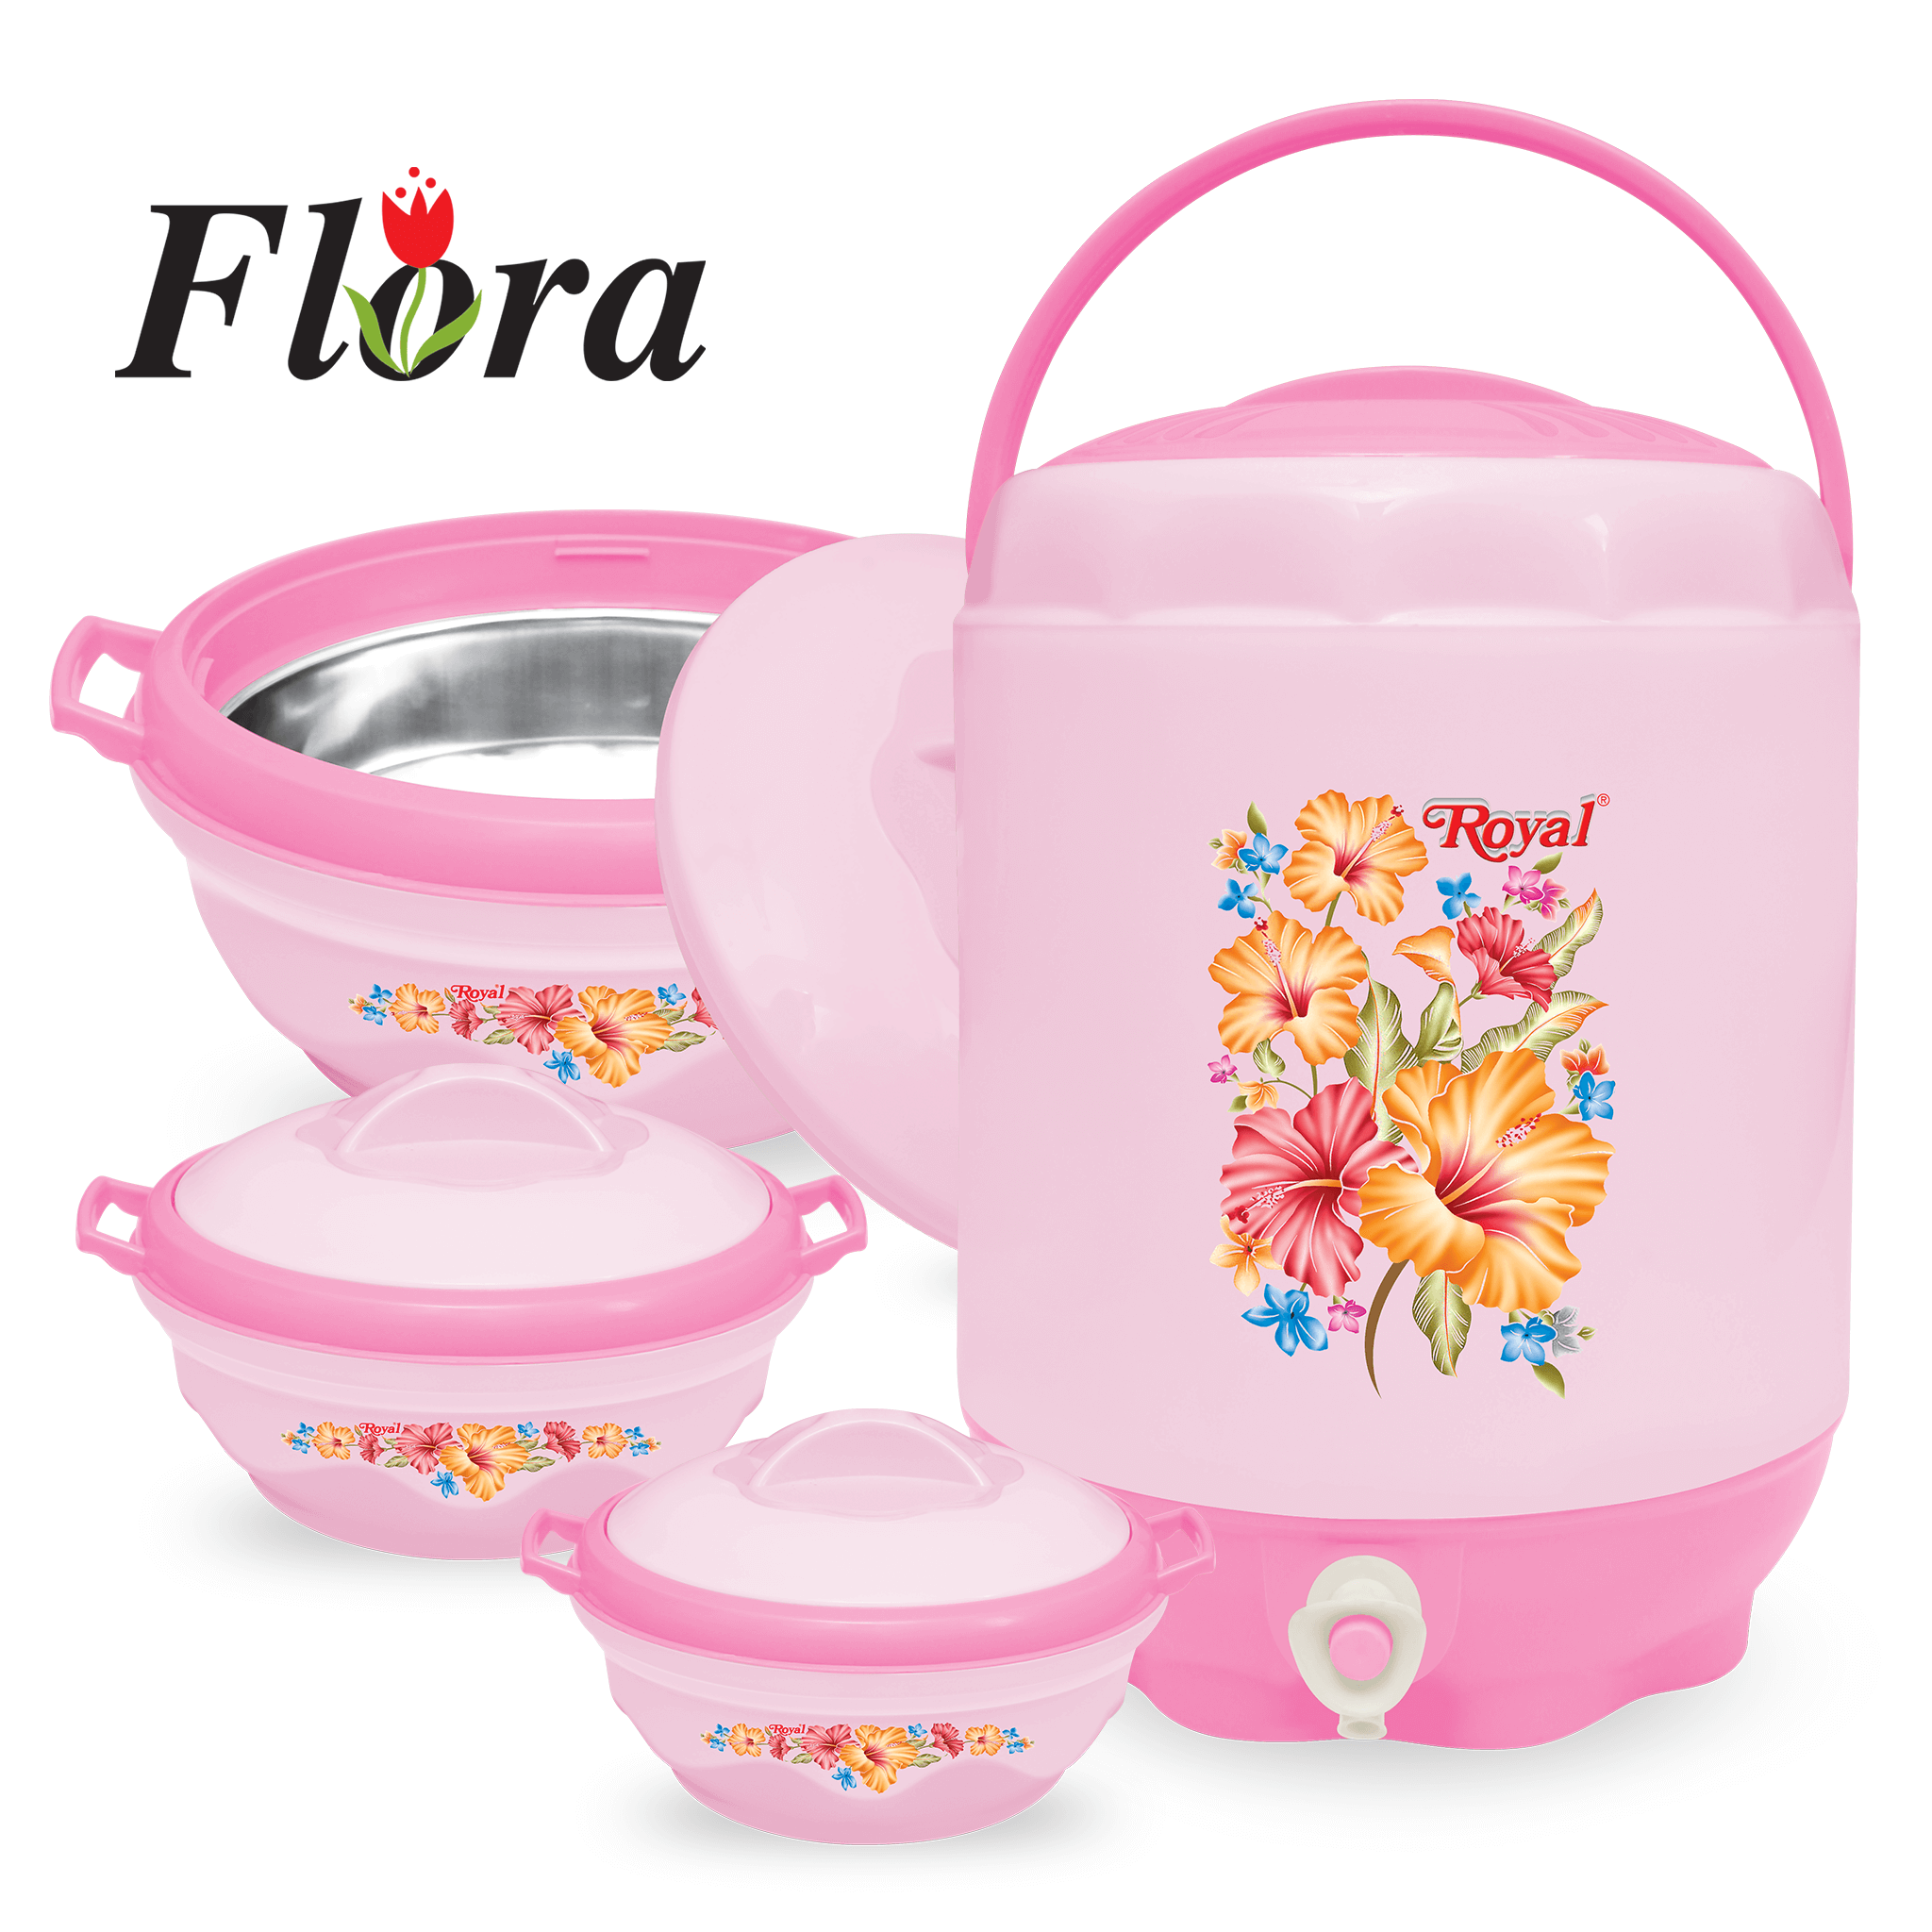 Flora Pink 4 Piece Gift Pack